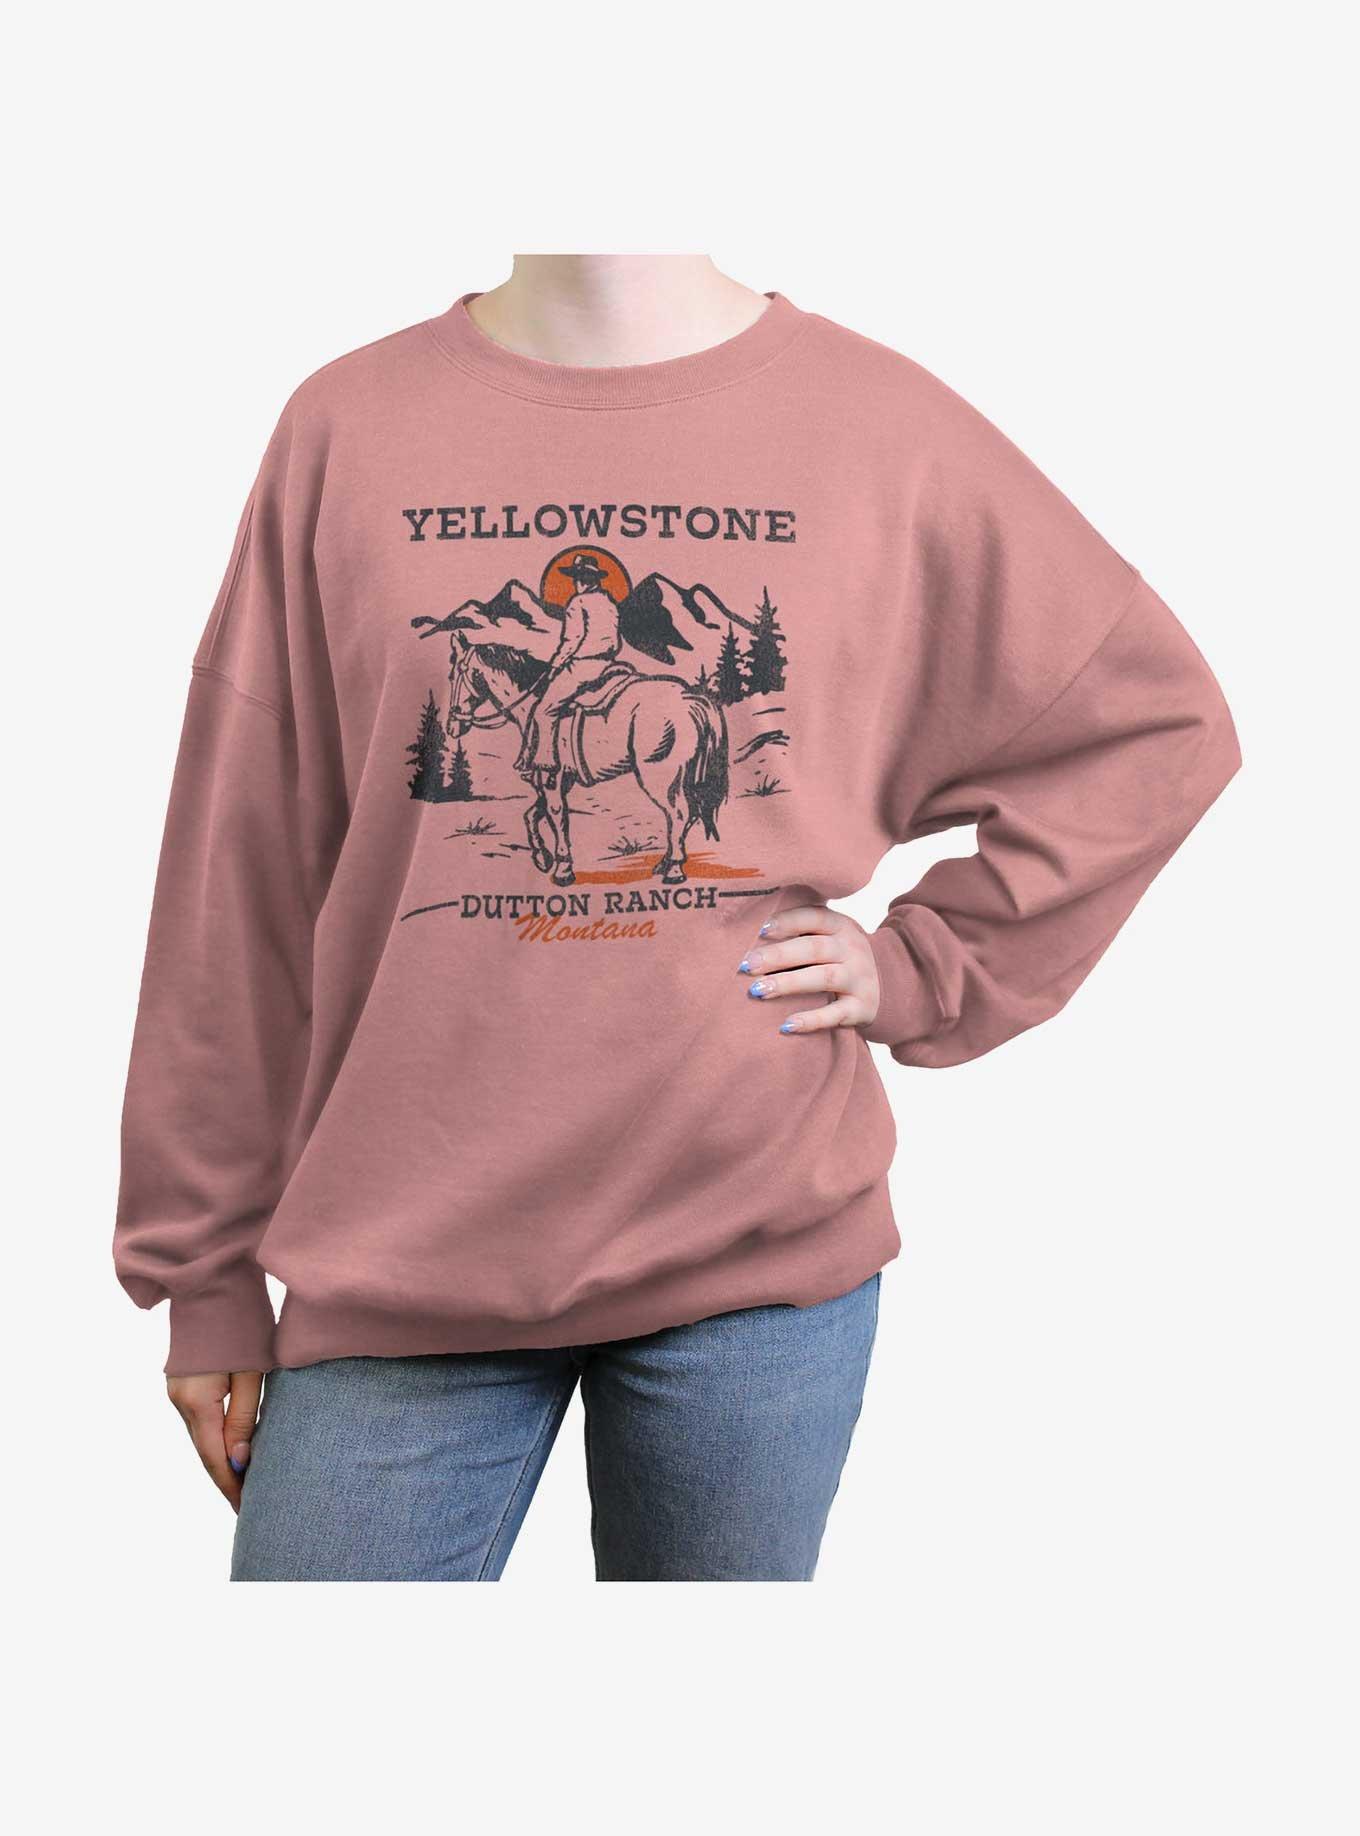 Yellowstone Dutton Ranch Mountains Womens Oversized Sweatshirt, DESERTPNK, hi-res